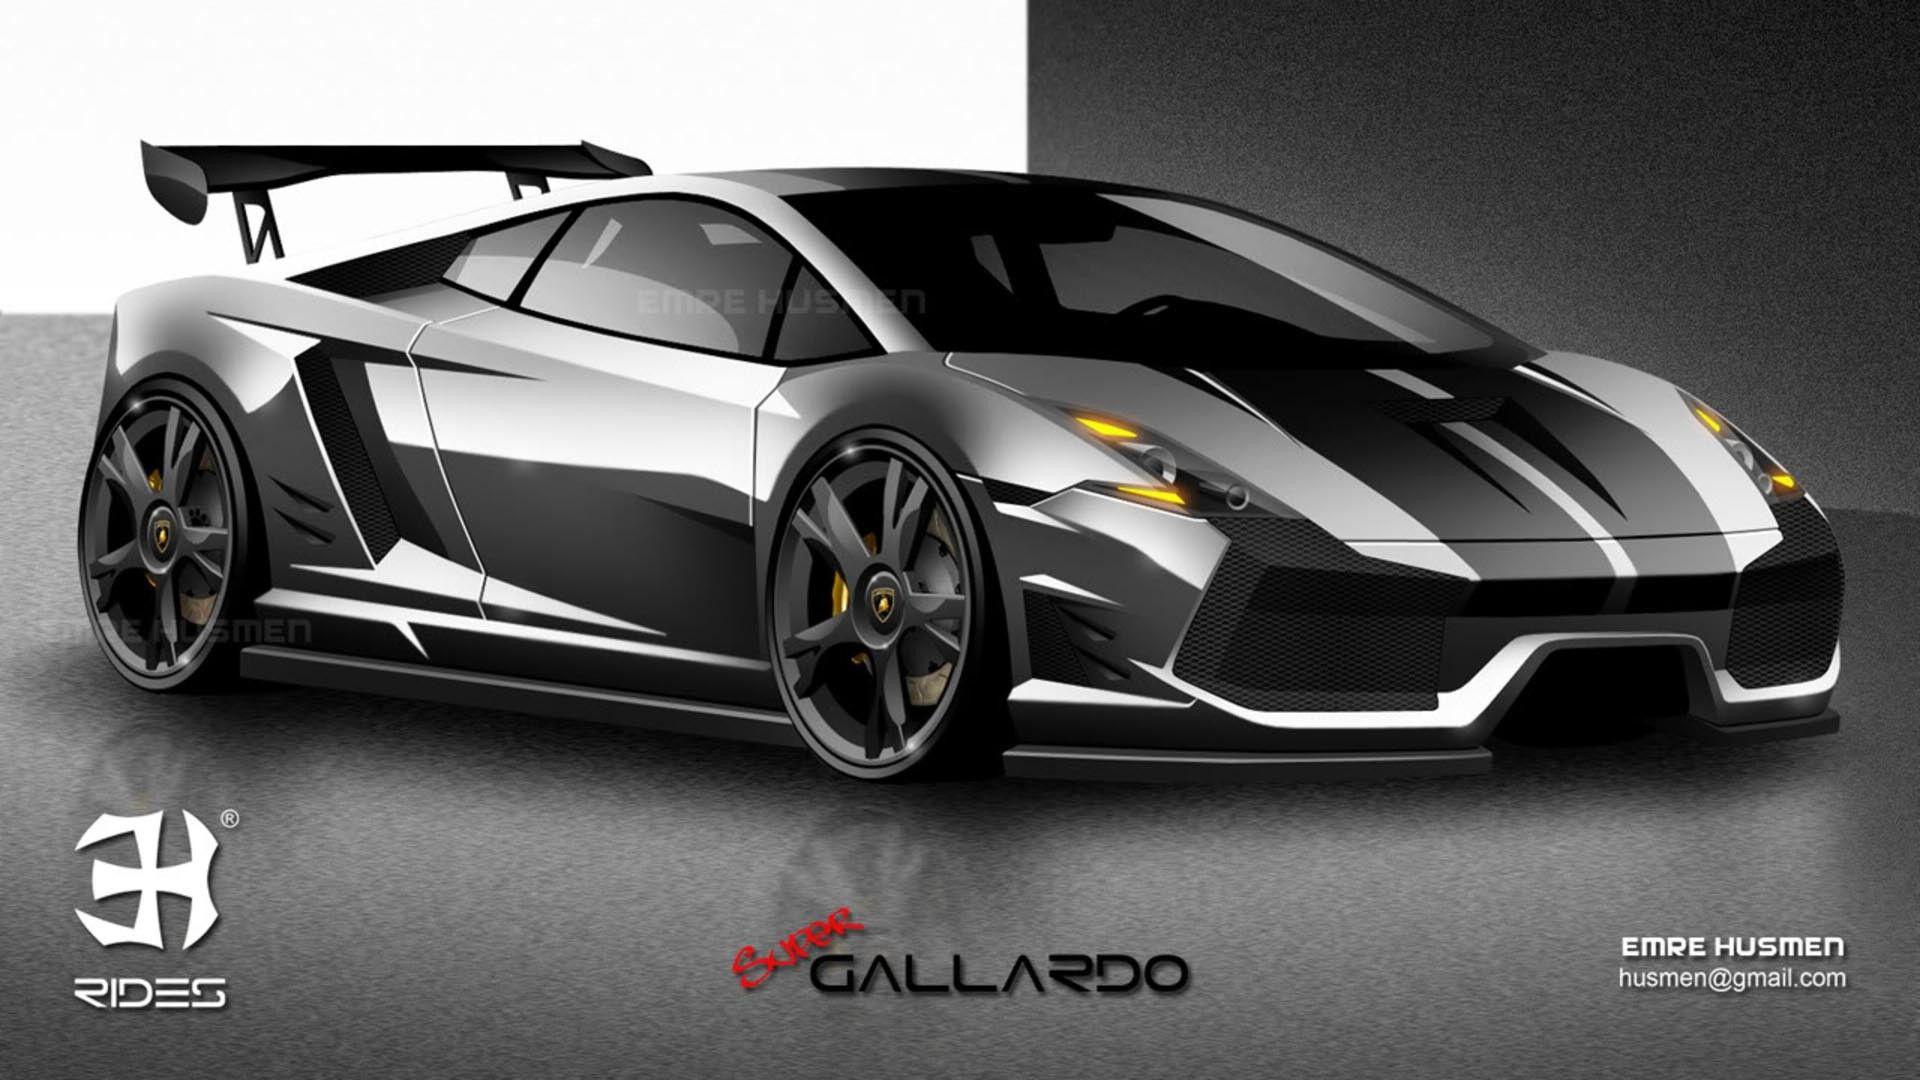 Black Lamborghini HD Wallpapers - Top Free Black Lamborghini HD